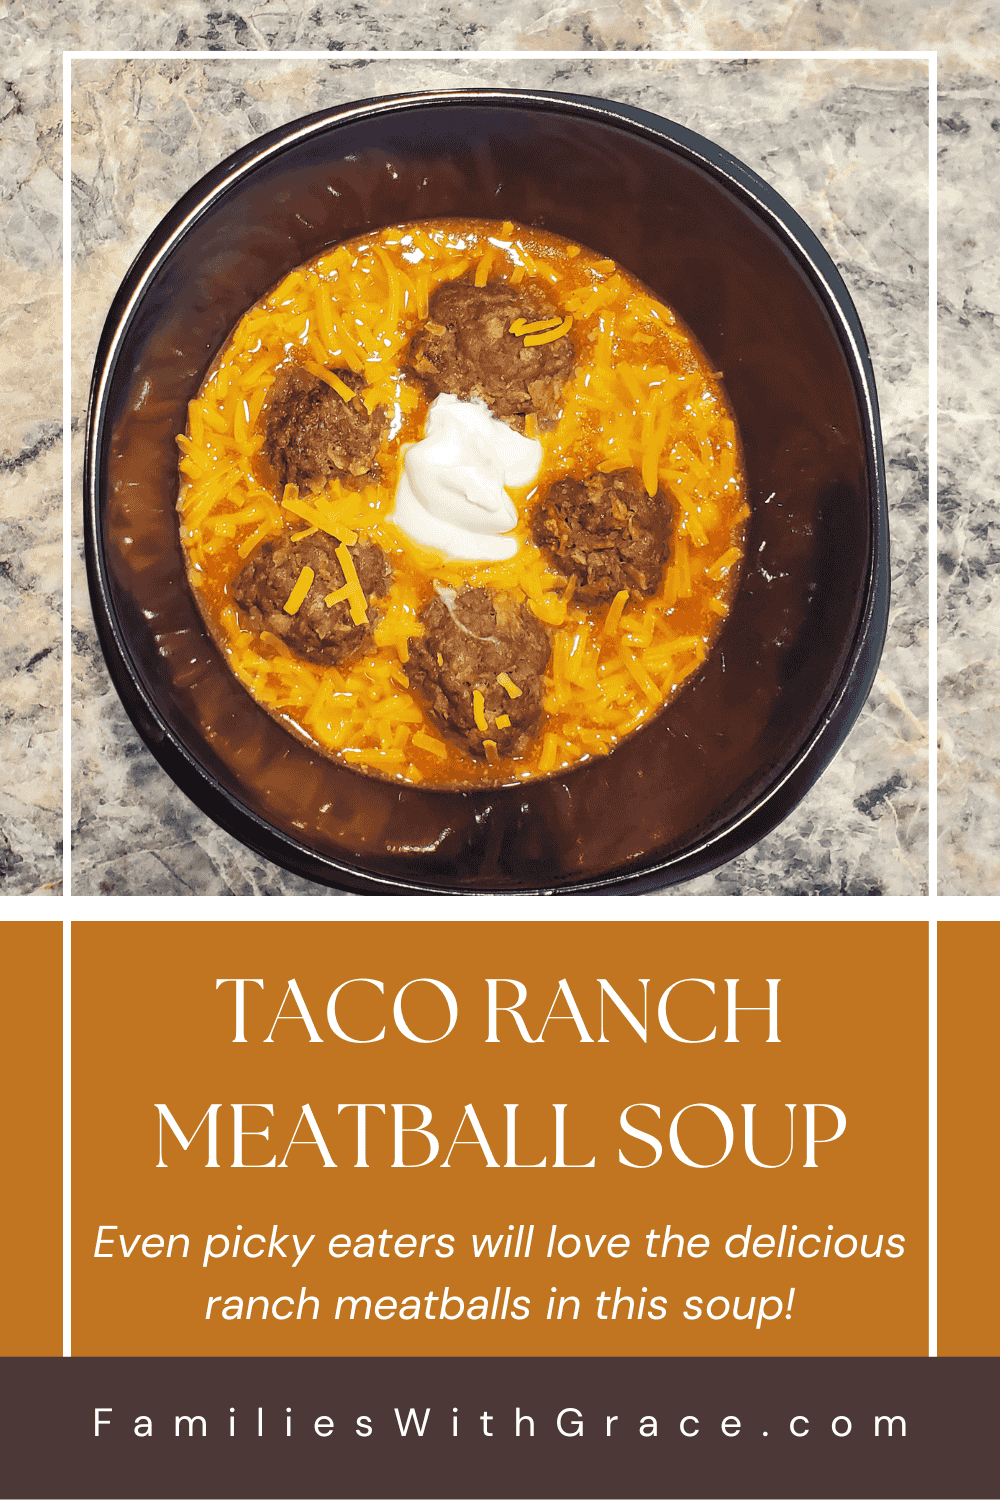 Taco ranch meatball soup